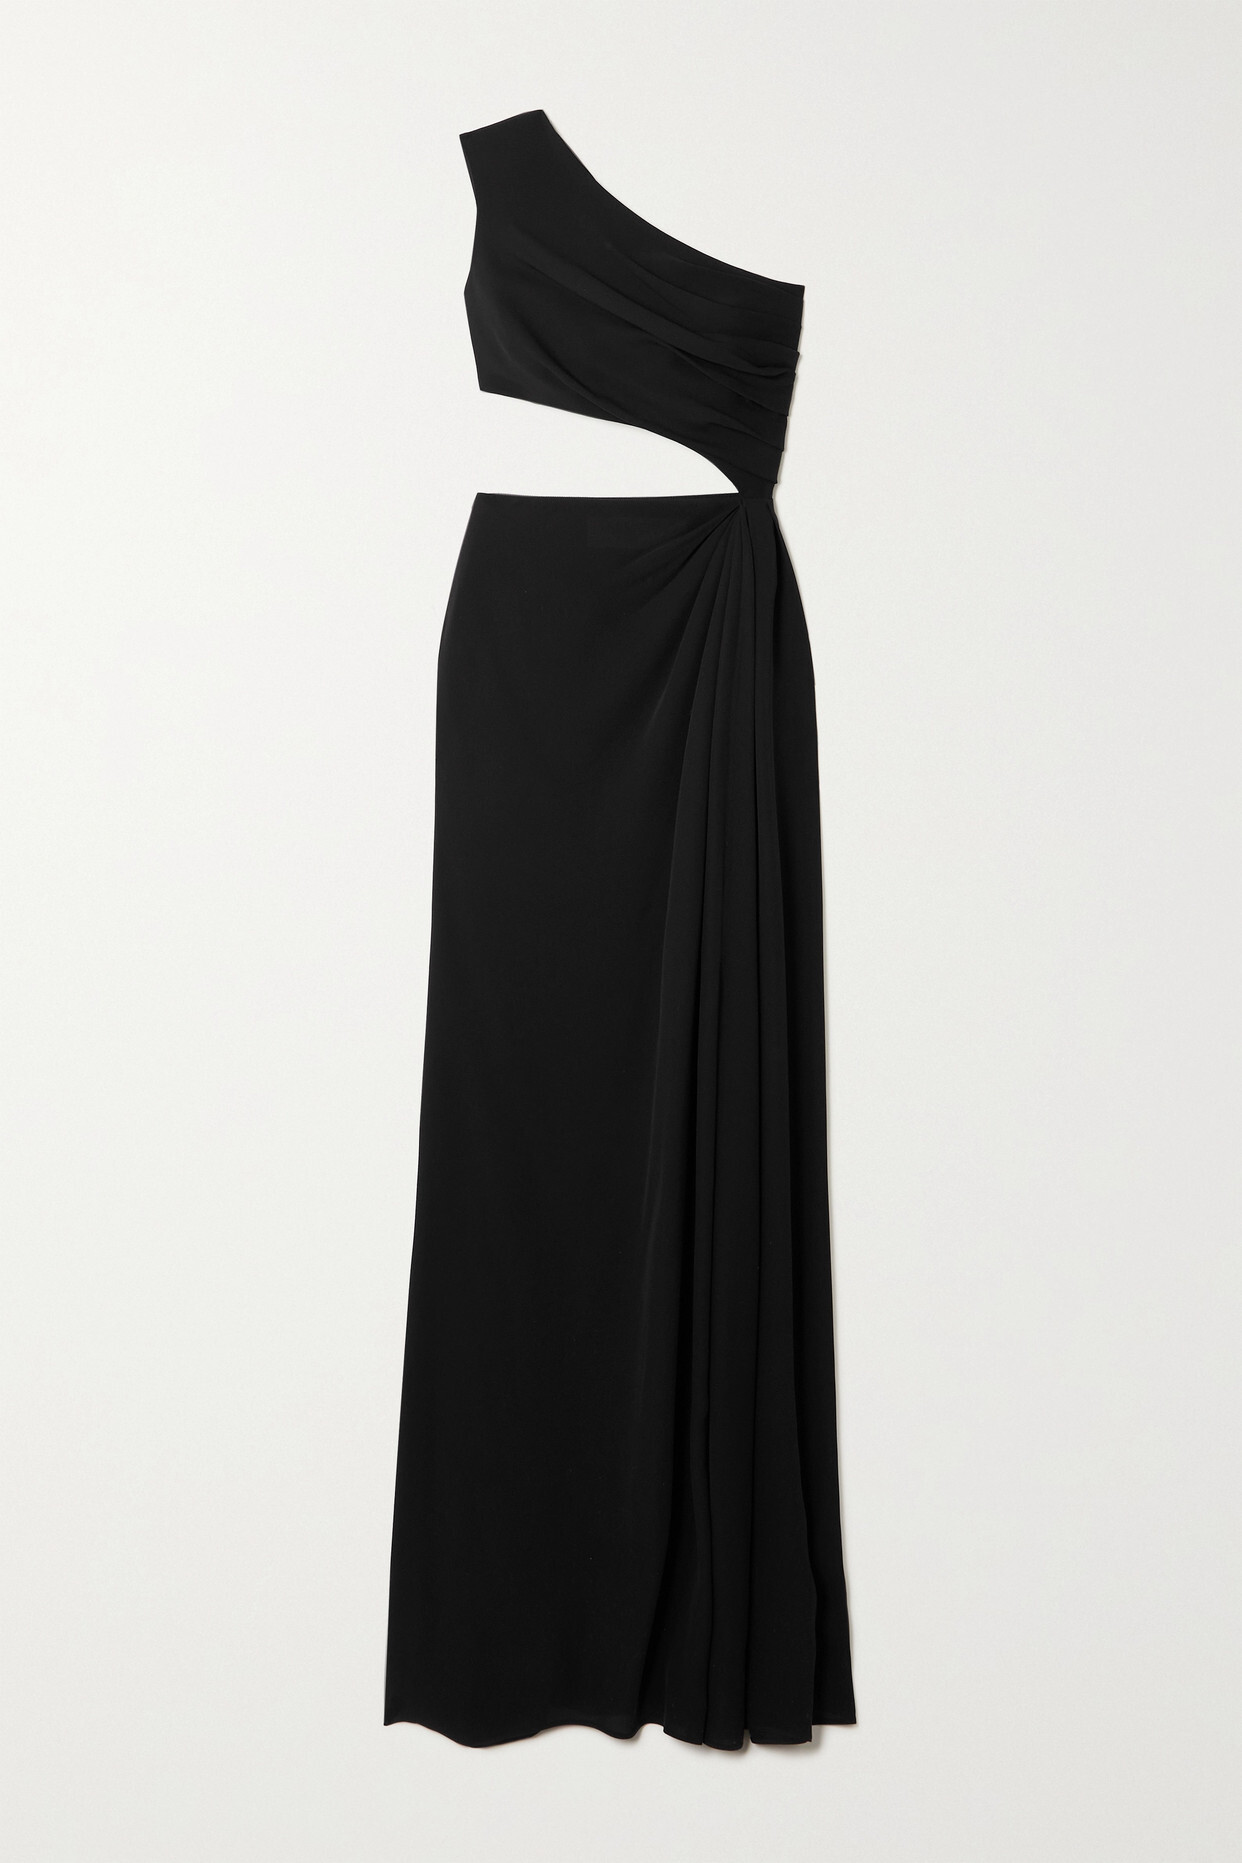 Valentino - One-shoulder Cutout Silk-cady Gown - Black